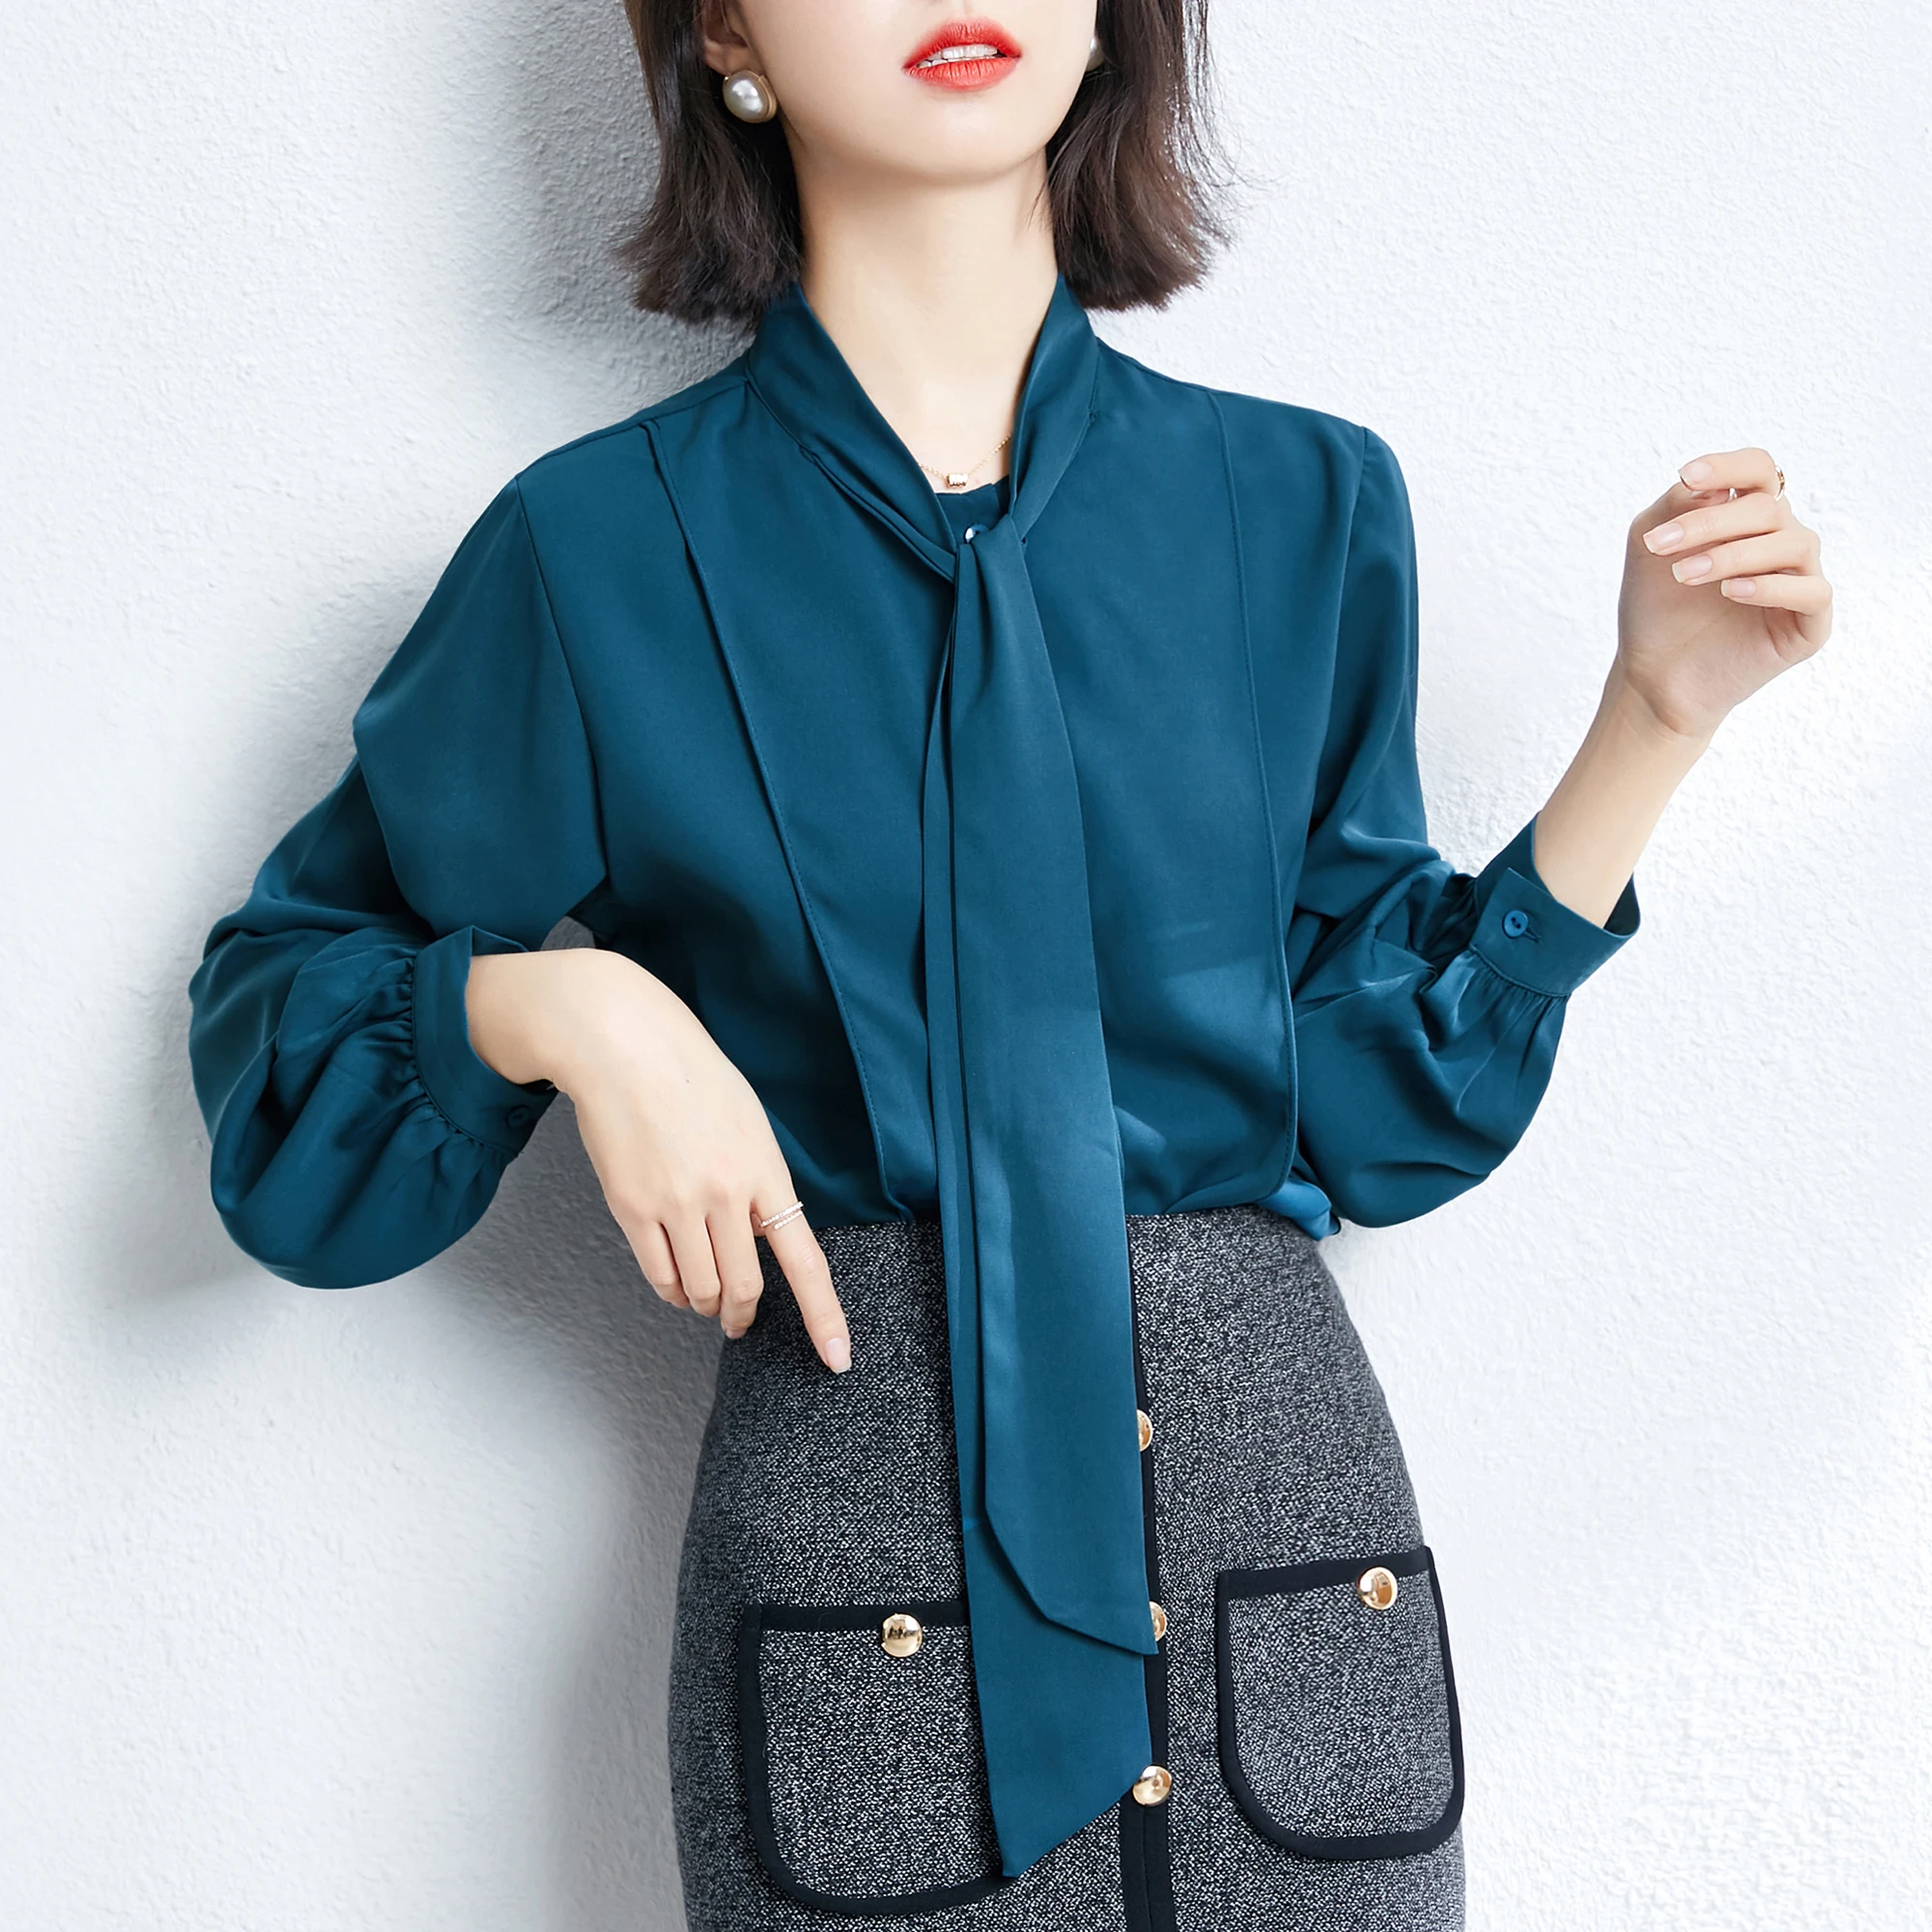 2021 Spring Women Blouses Korean style Lace up collar Satin shirts Chiffon Long sleeve female blusas Ladies tops